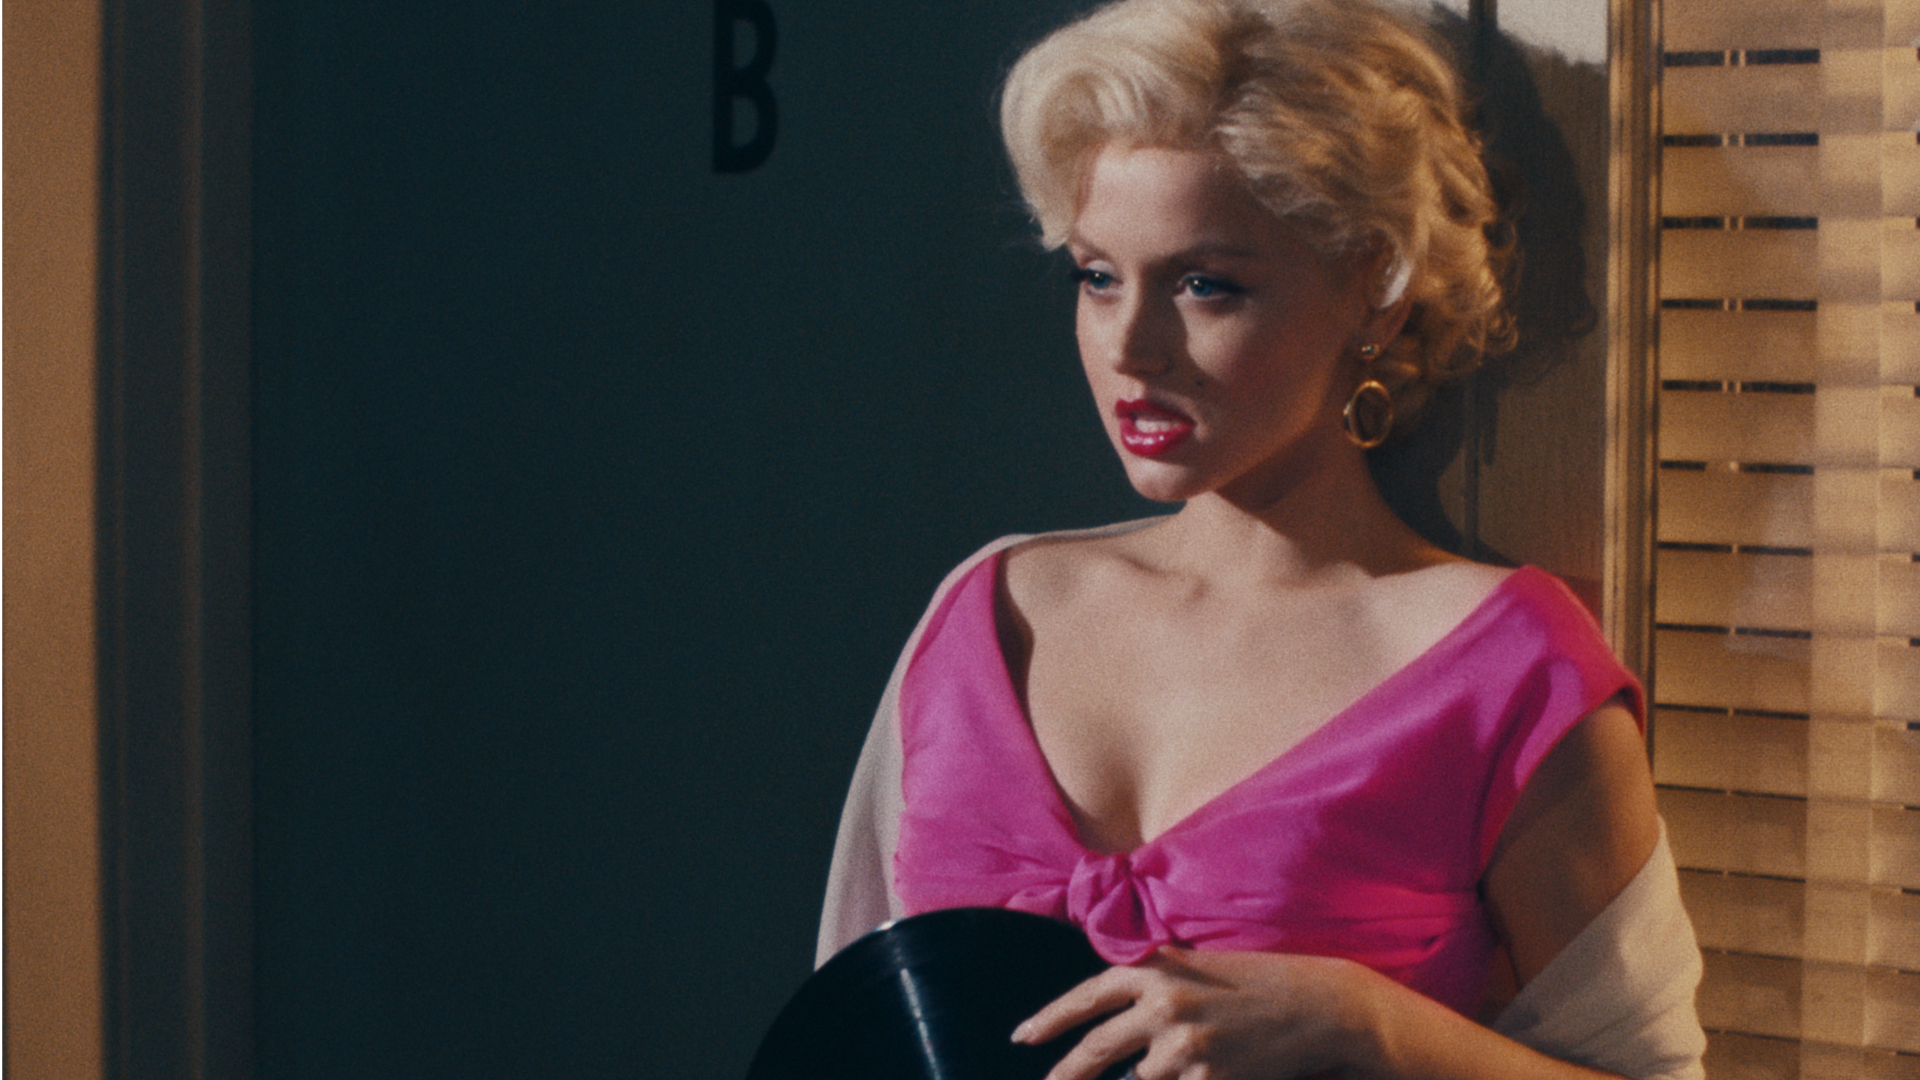 Blonde review: "Ana de Armas is luminous in a kaleidoscopic study of Marilyn Monroe" | GamesRadar+